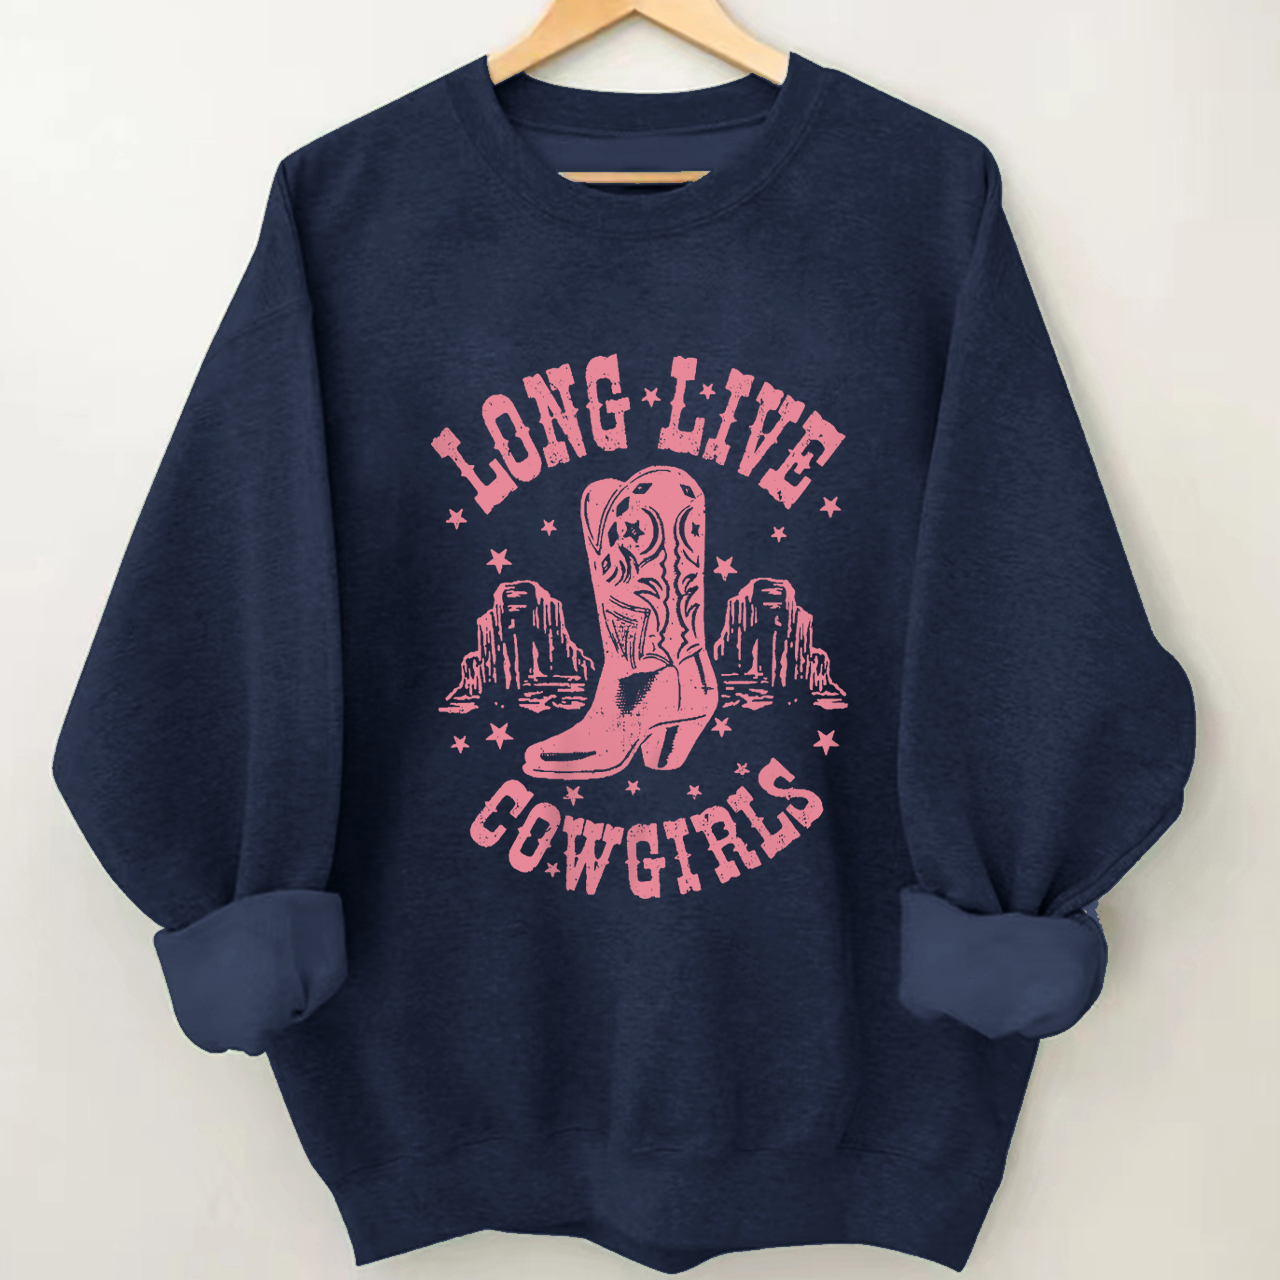 Cowgirl Western Long Lives Sweatshirt